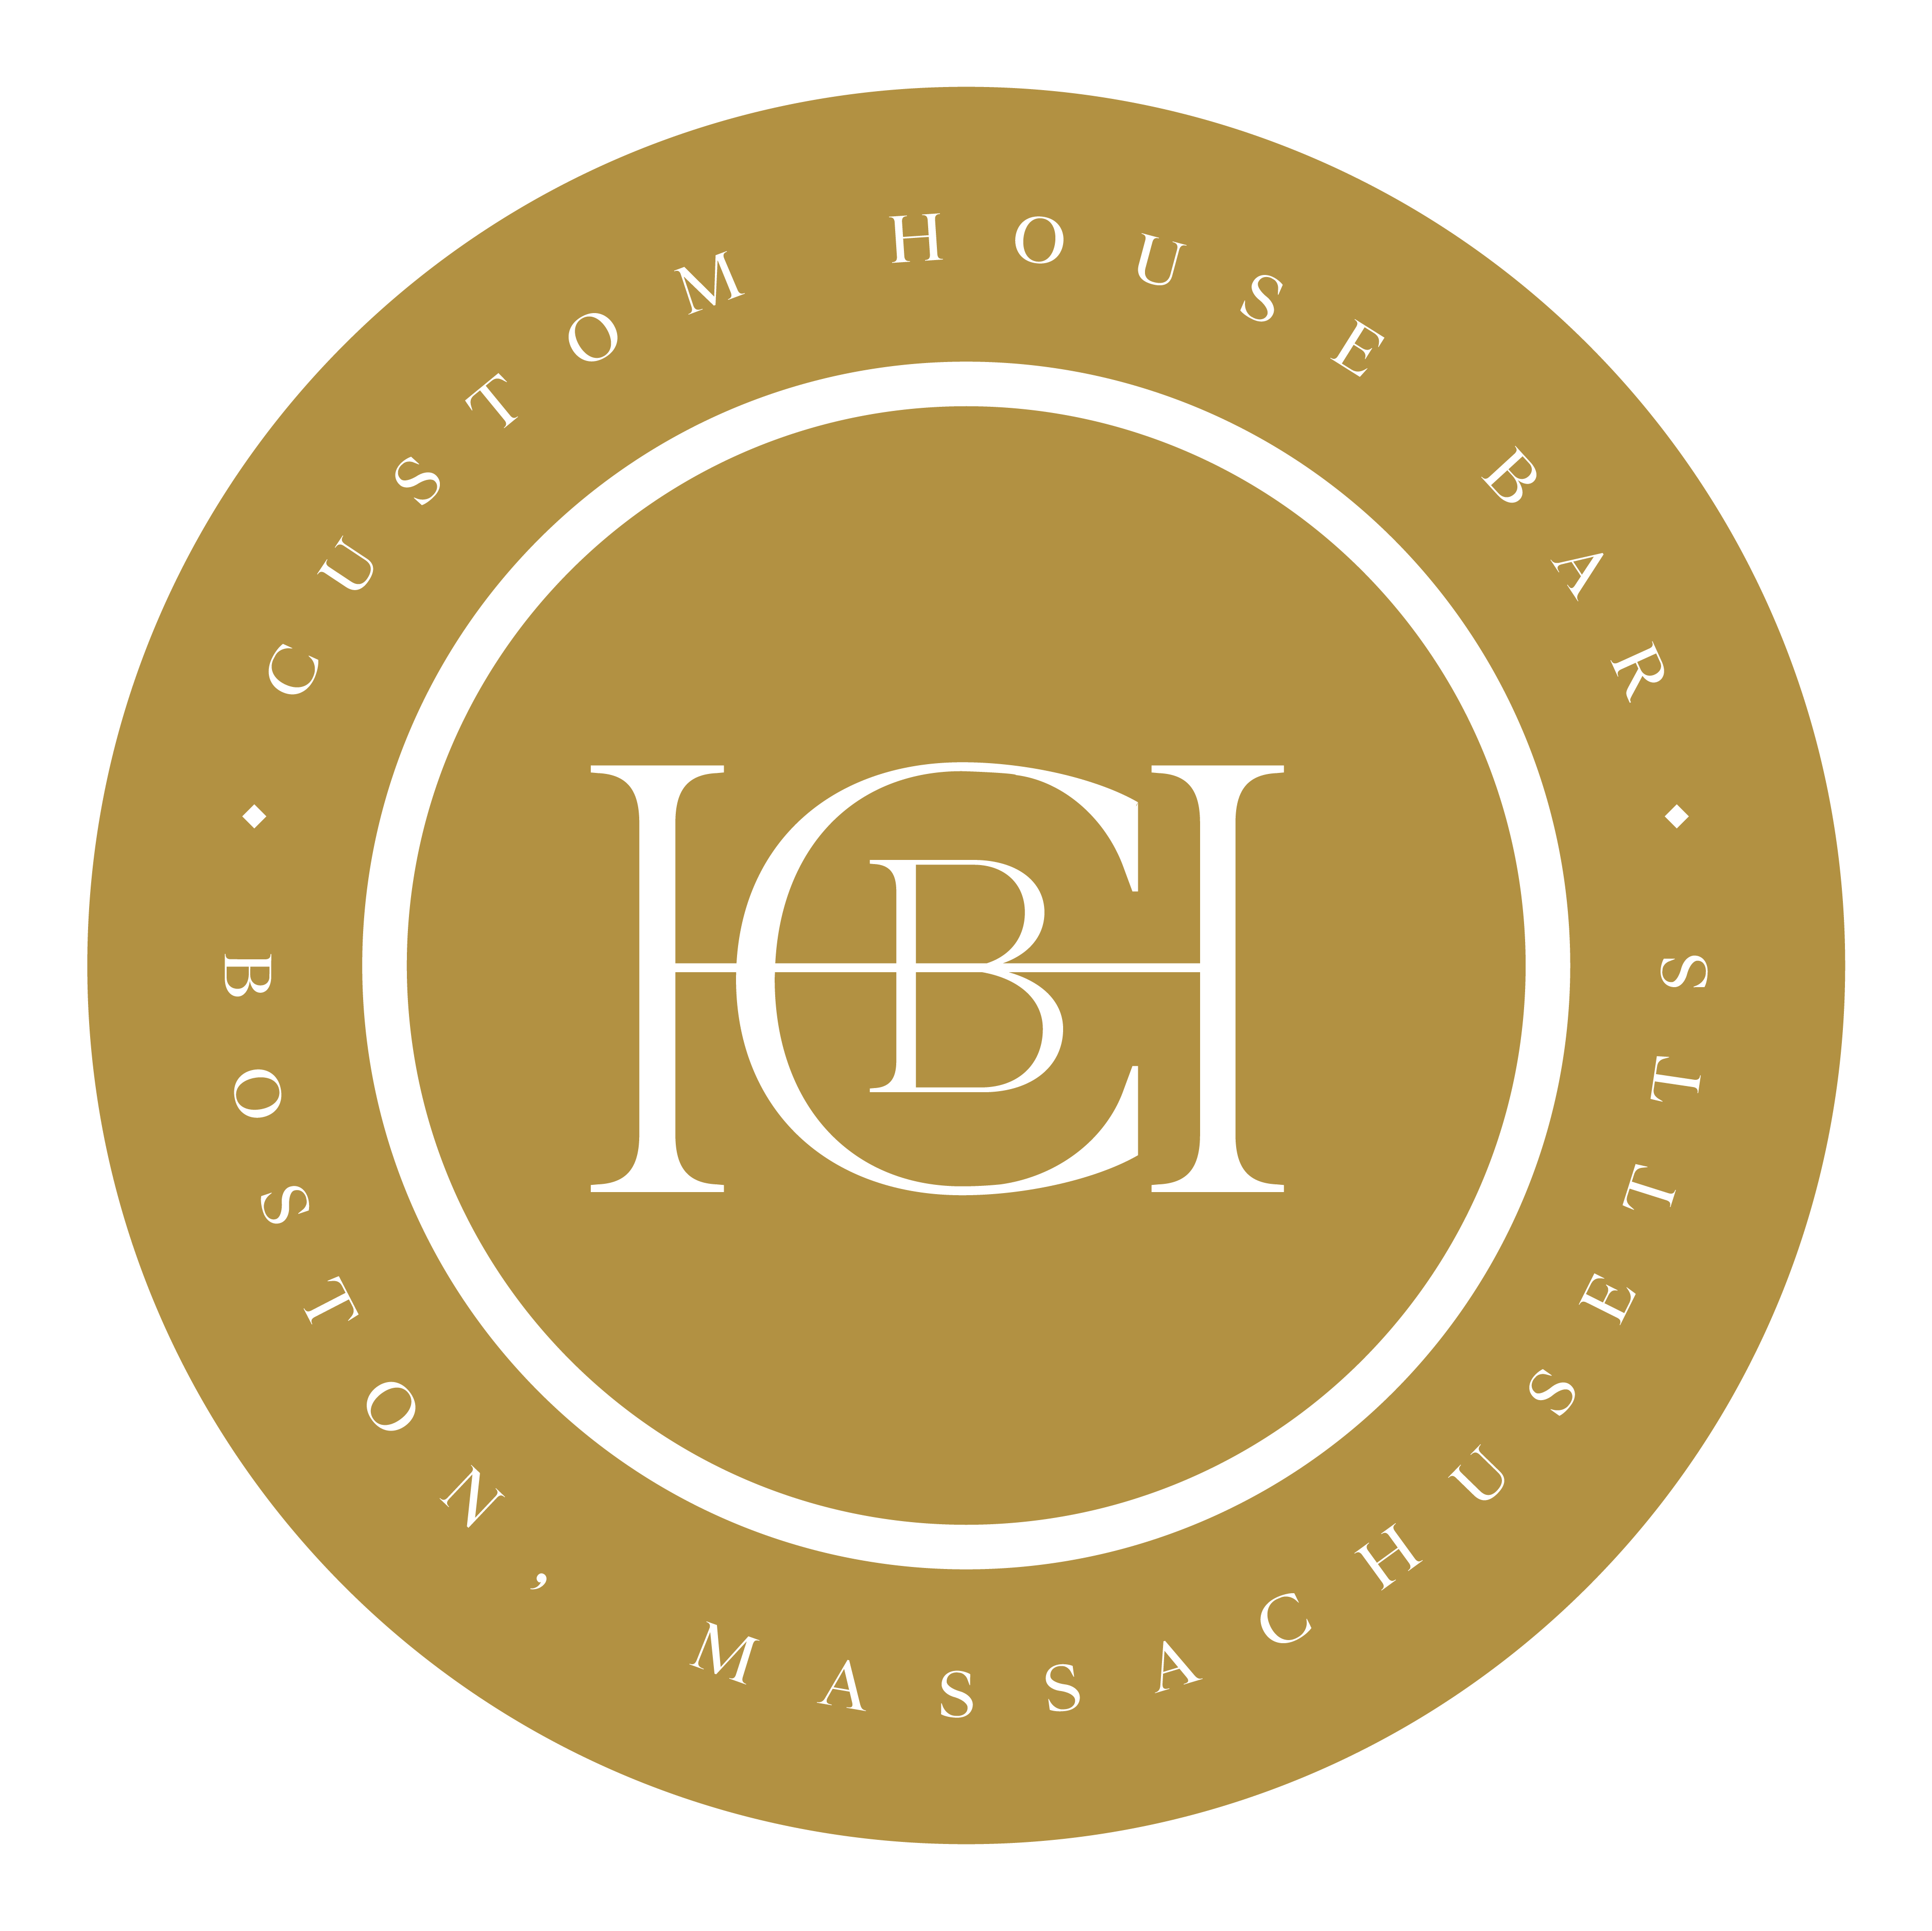 Custom House Bar Logo logo design by logo designer Daniel Fernandez for your inspiration and for the worlds largest logo competition